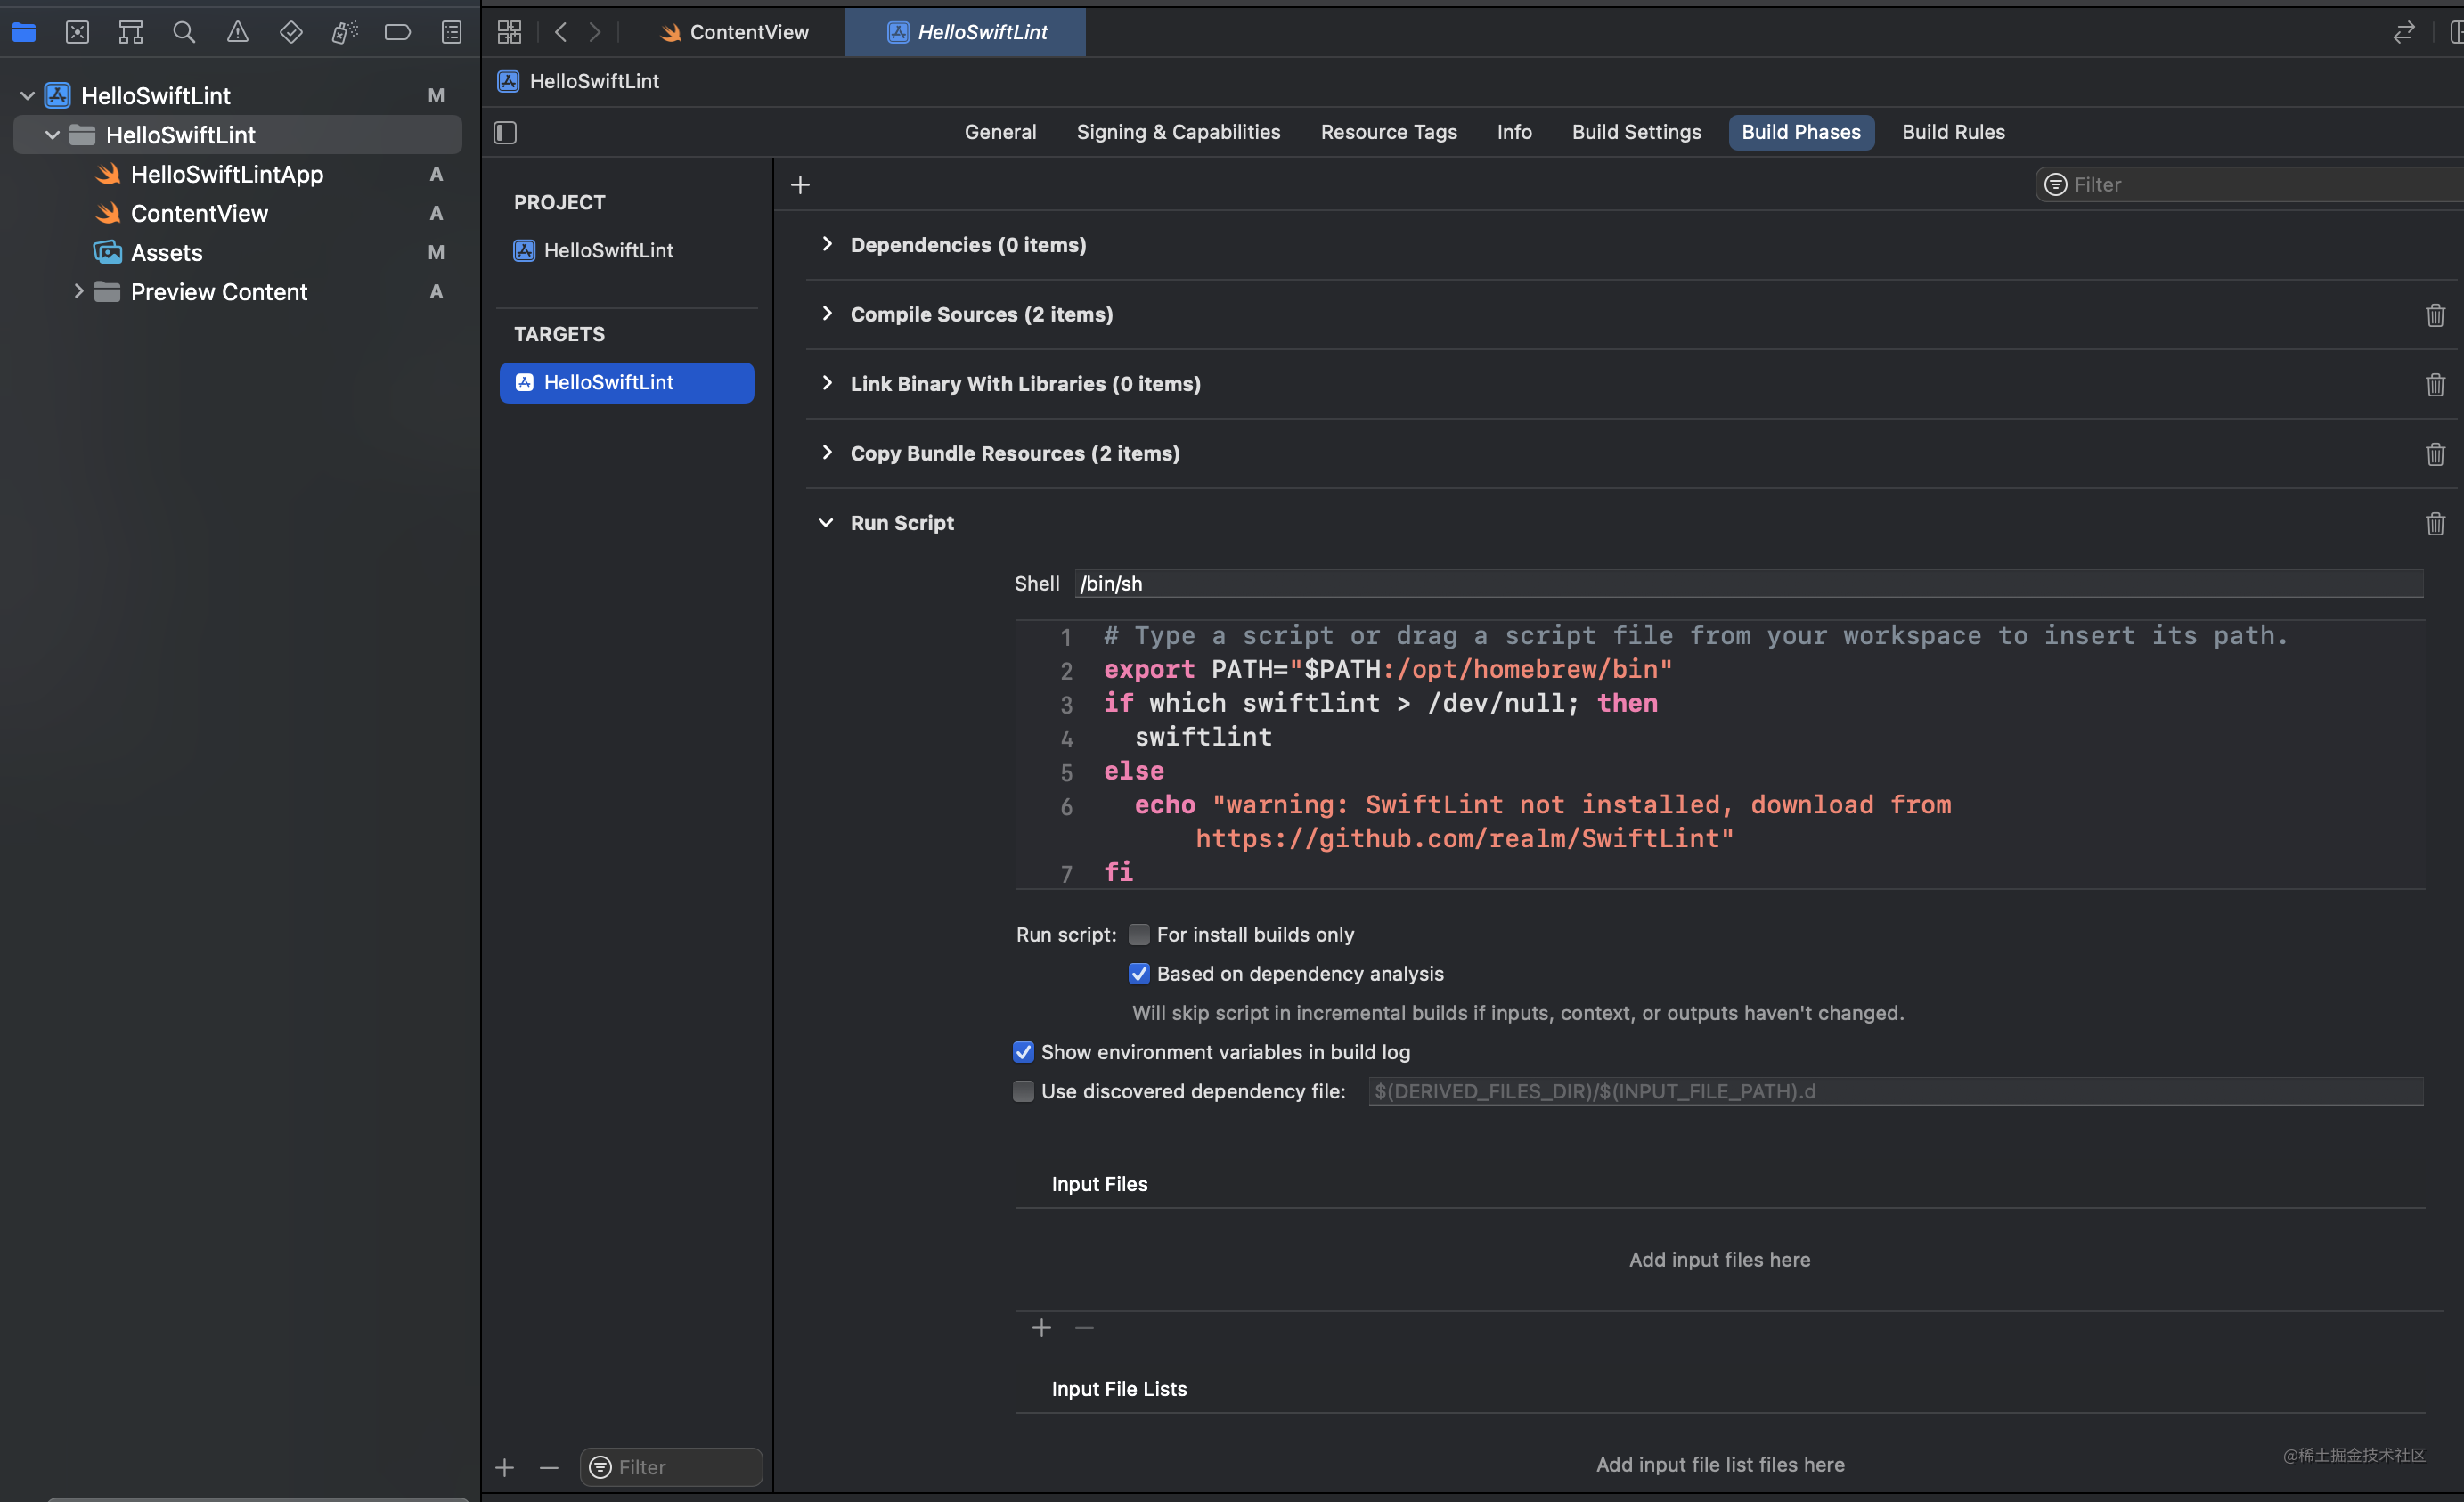 Add run scripts in Xcode to integrate SwiftLint